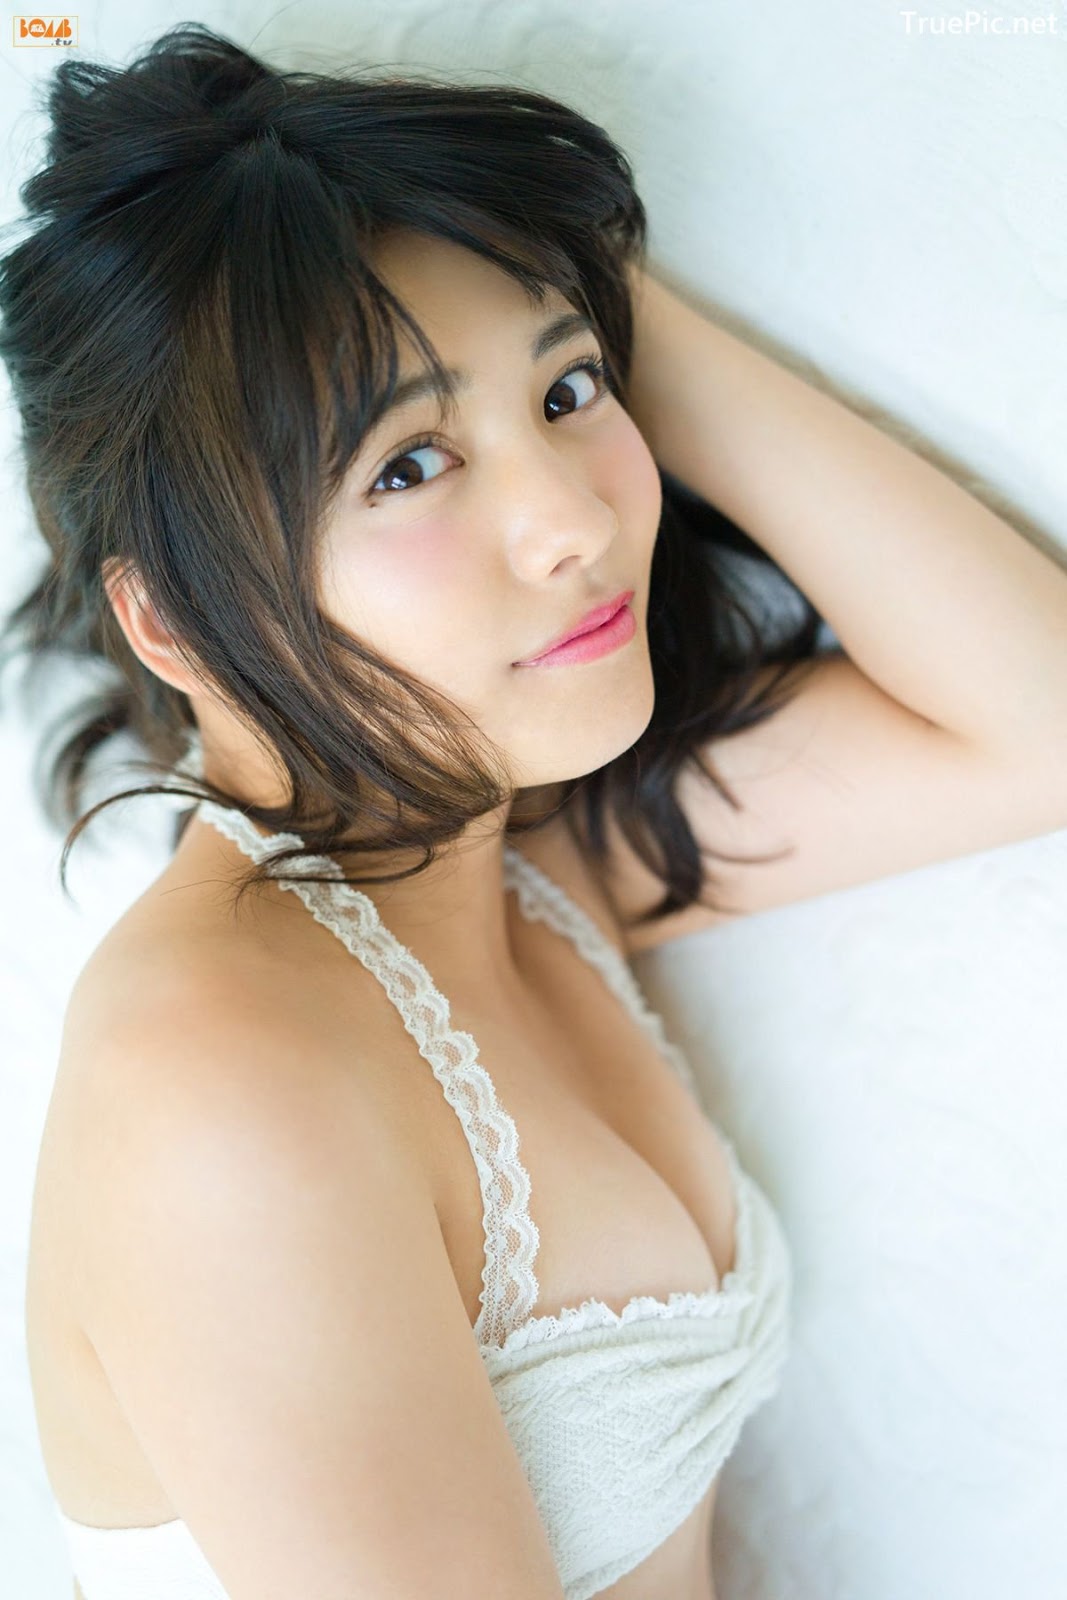 Image Japanese Model - Arisa Matsunaga - GRAVURE Channel Photo Jacket - TruePic.net - Picture-76